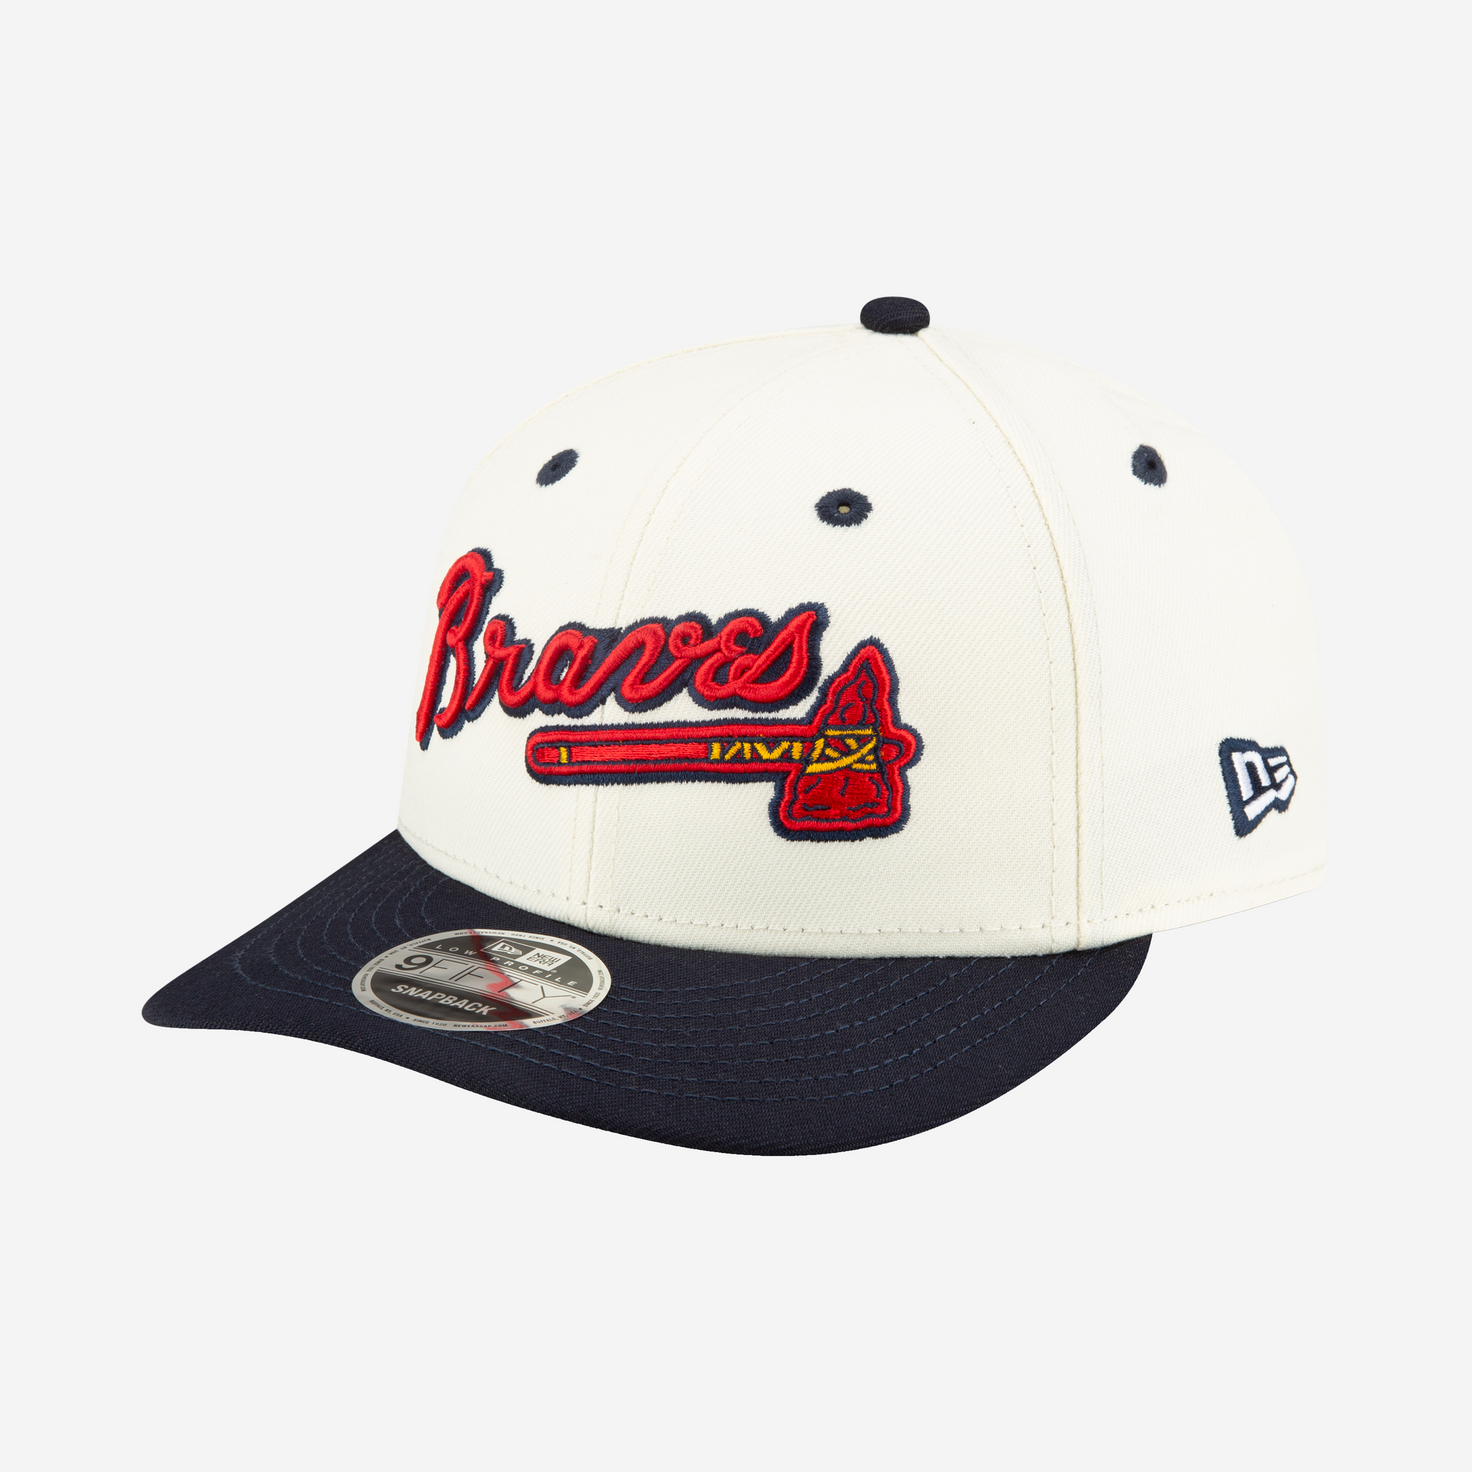 Atlanta Braves Hats, Braves Caps, Beanie, Snapbacks